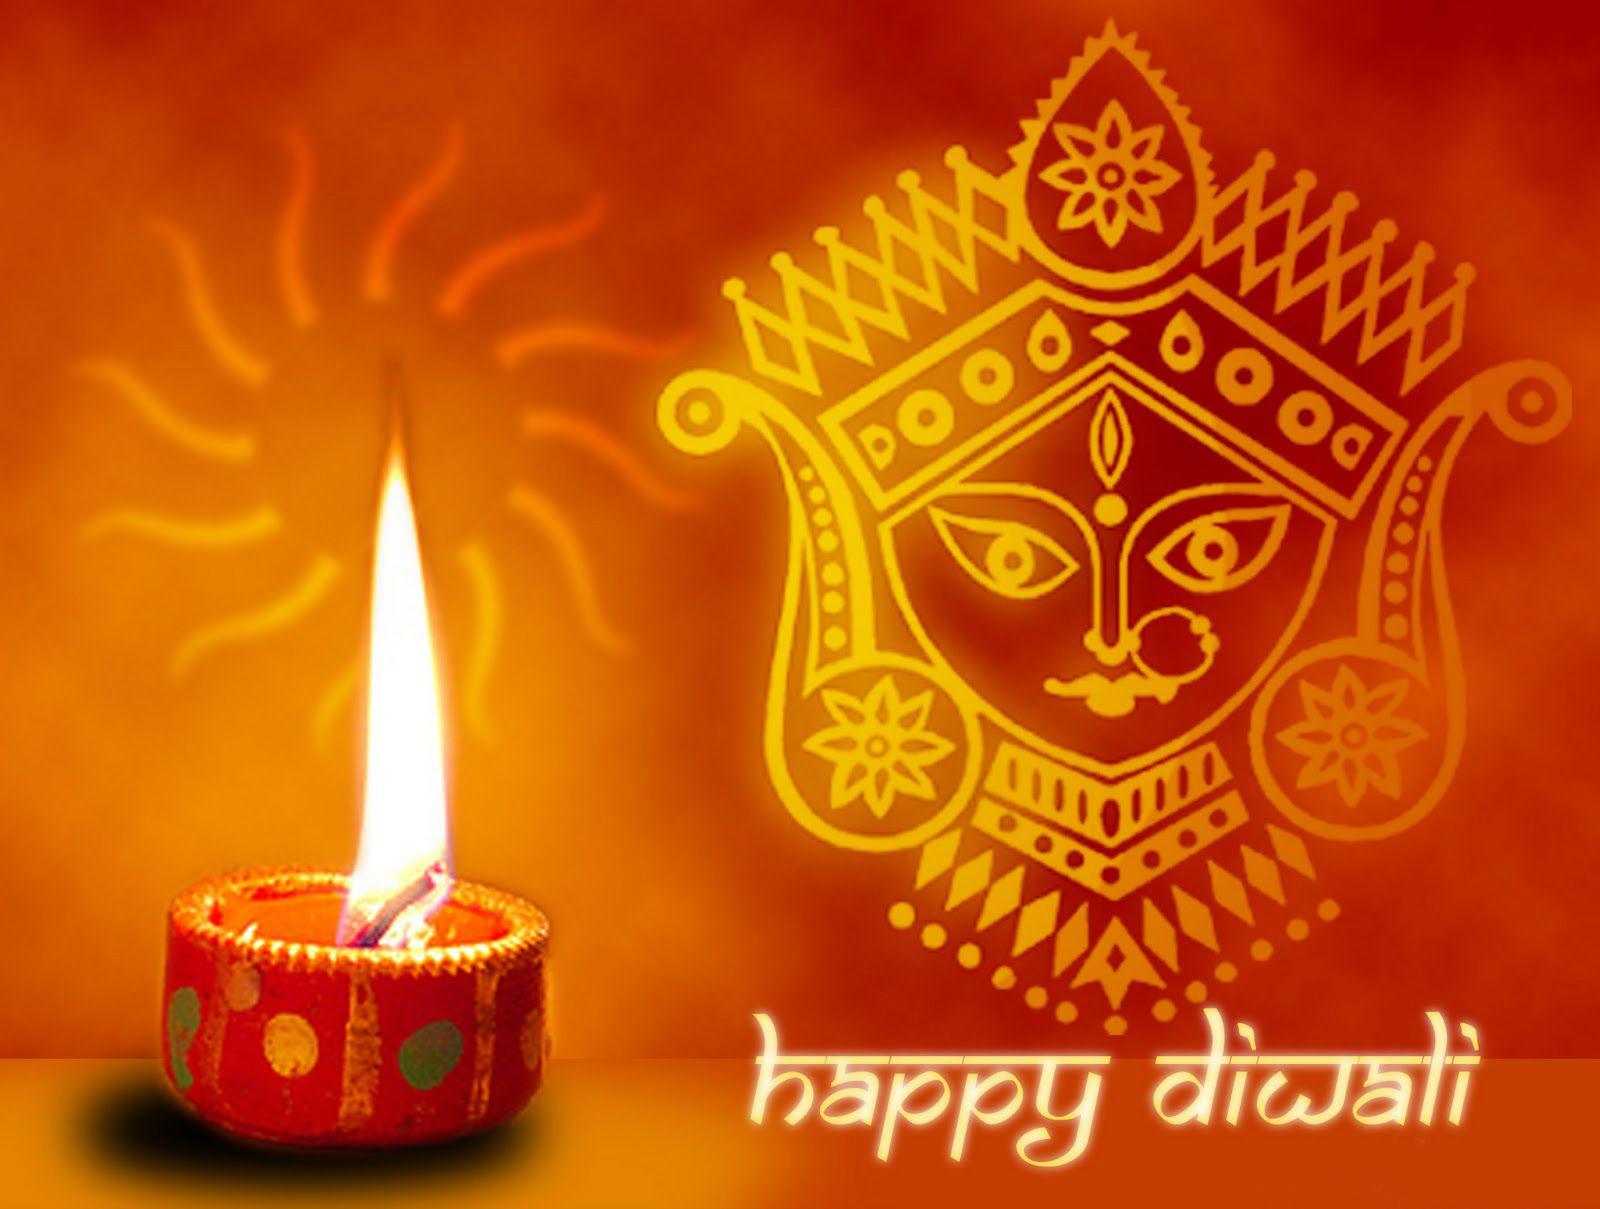 Happy Diwali Image 2019 Free Download for Whatsapp